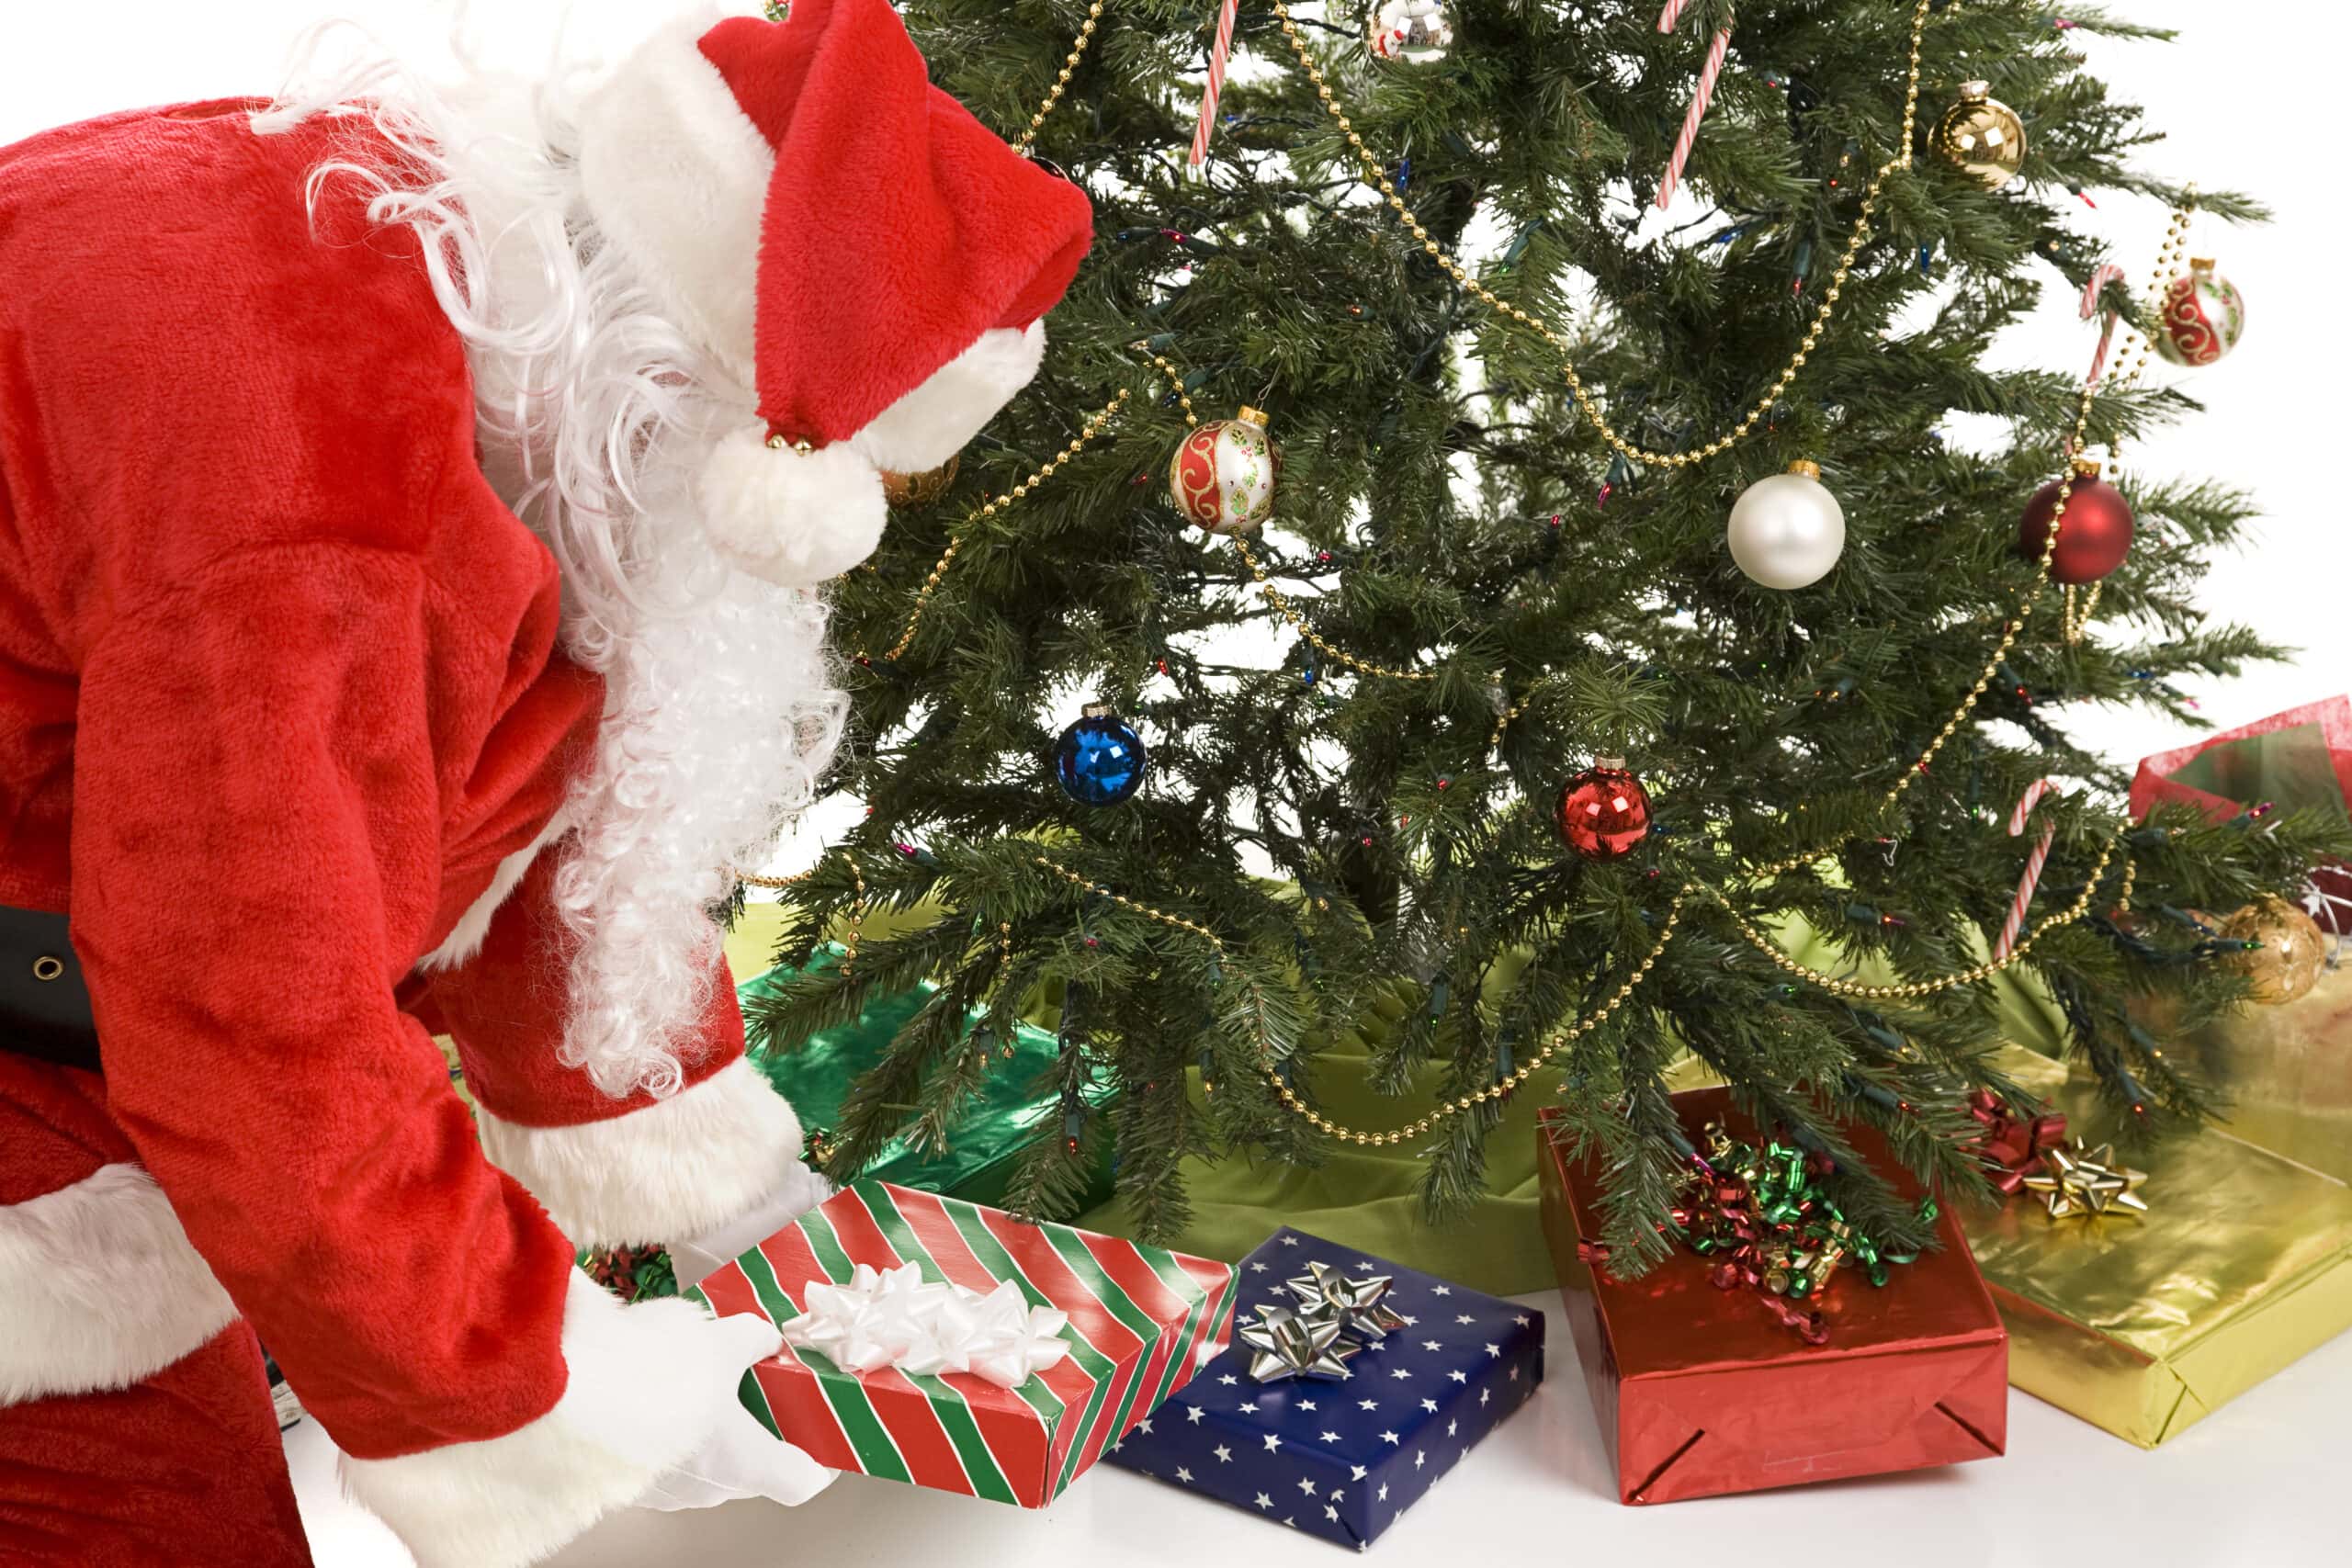 Santa putting gifts under tree